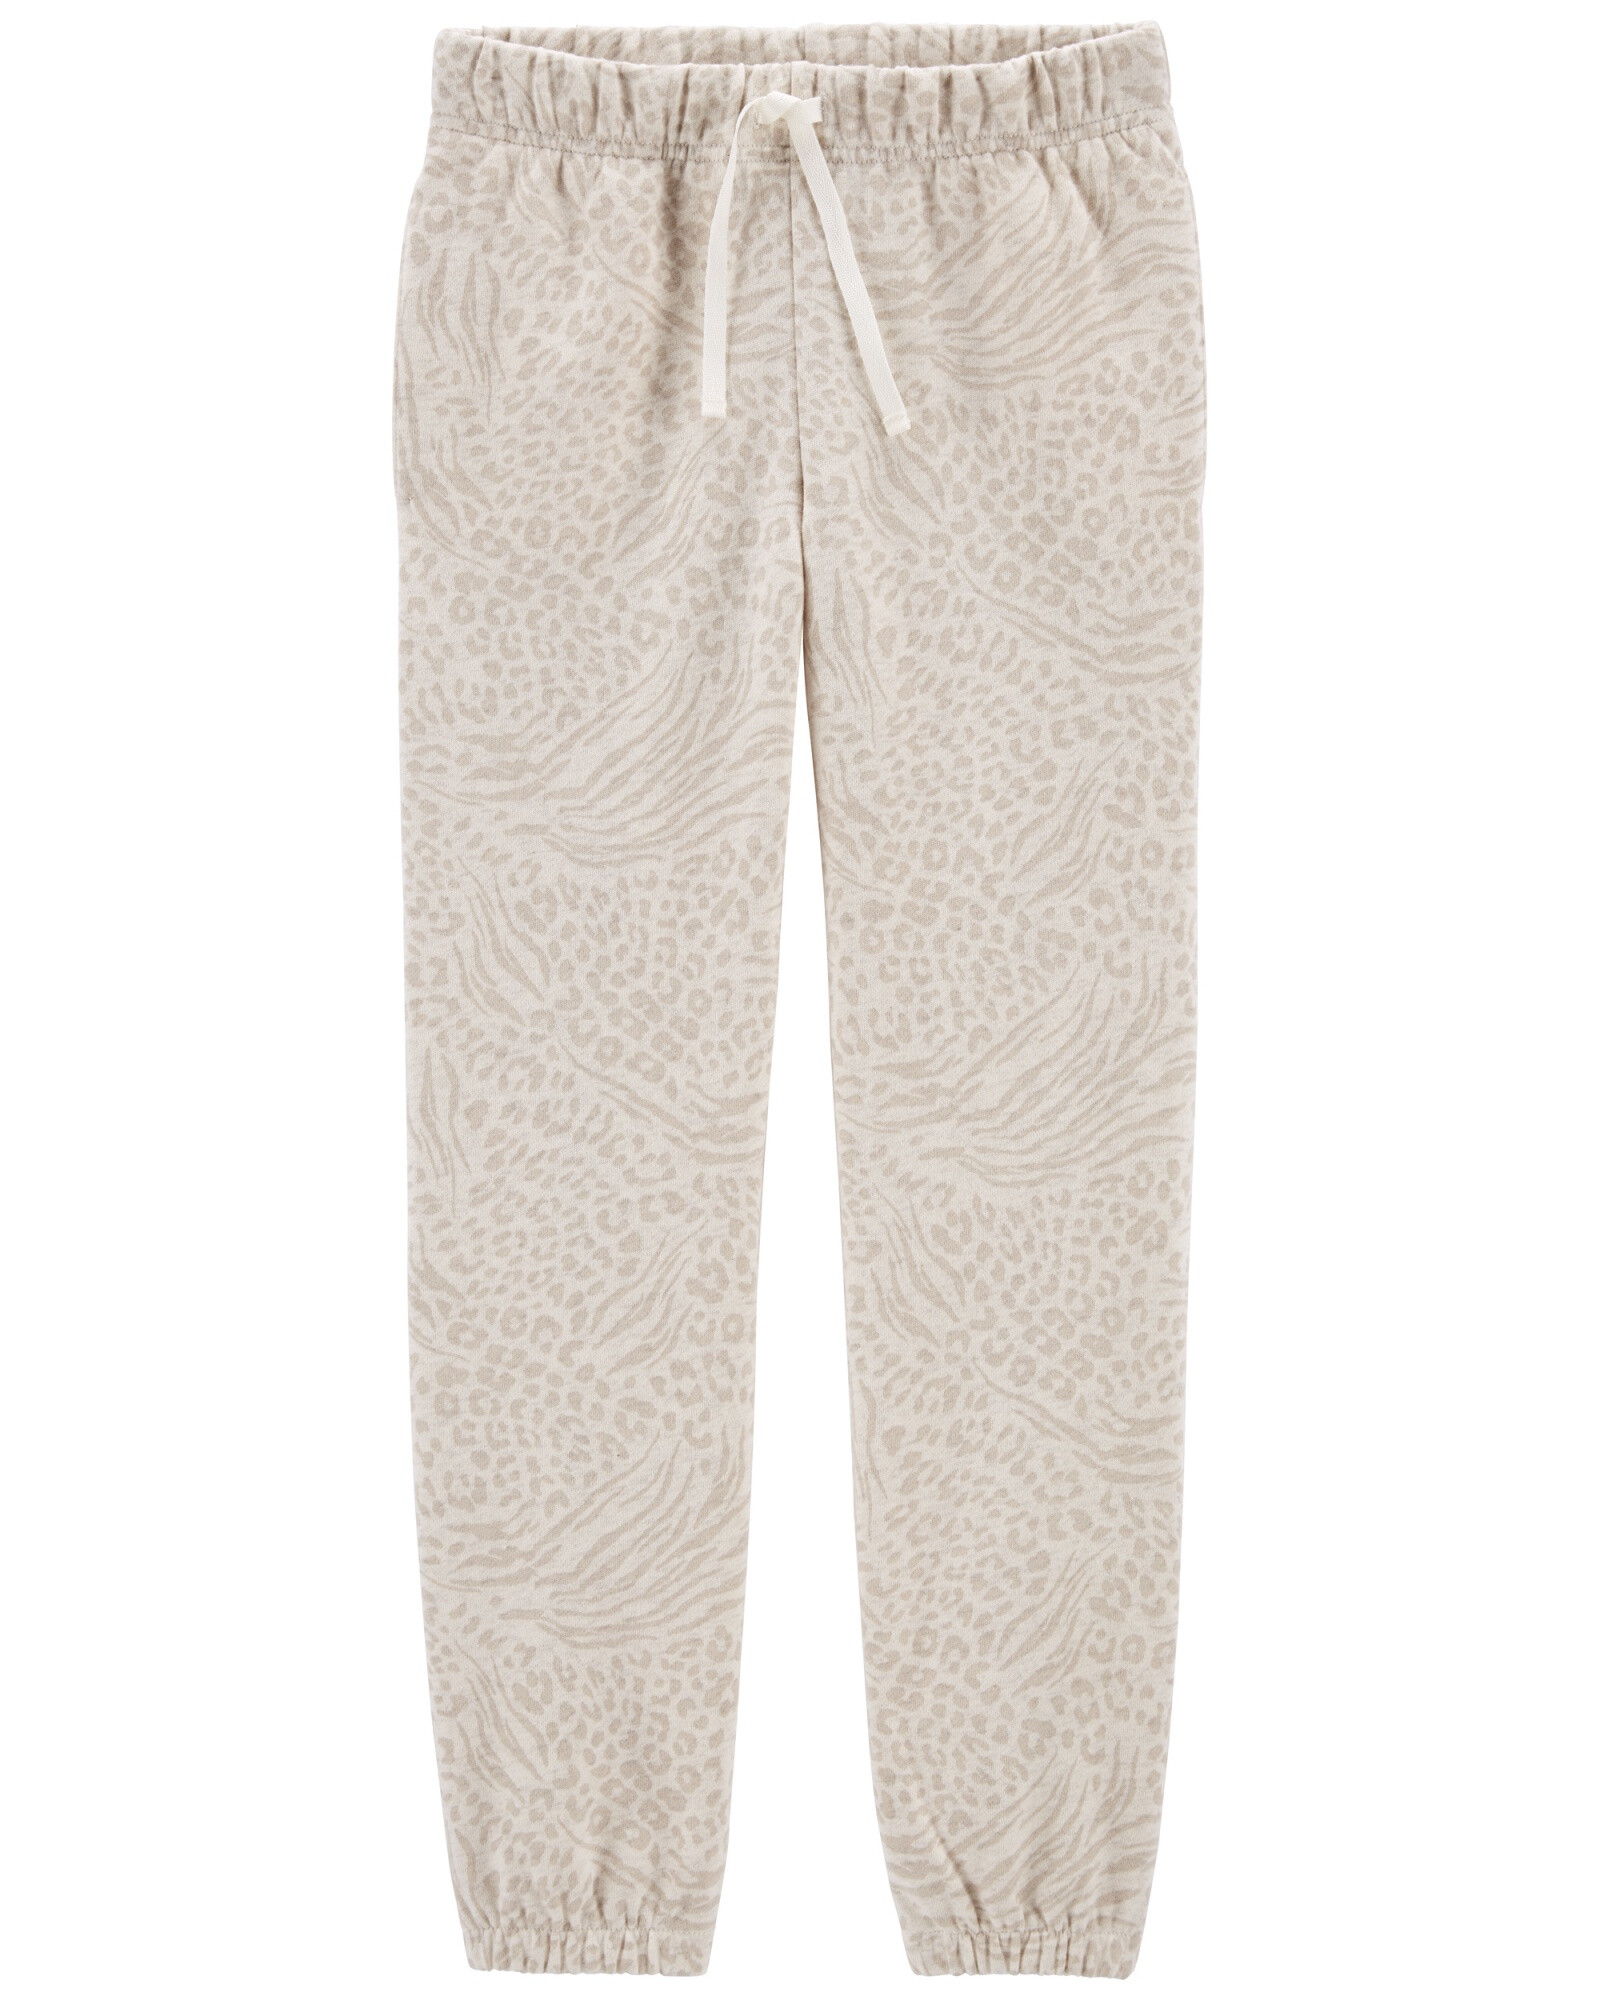 Pantalón de algodón con felpa diseño leopardo 0